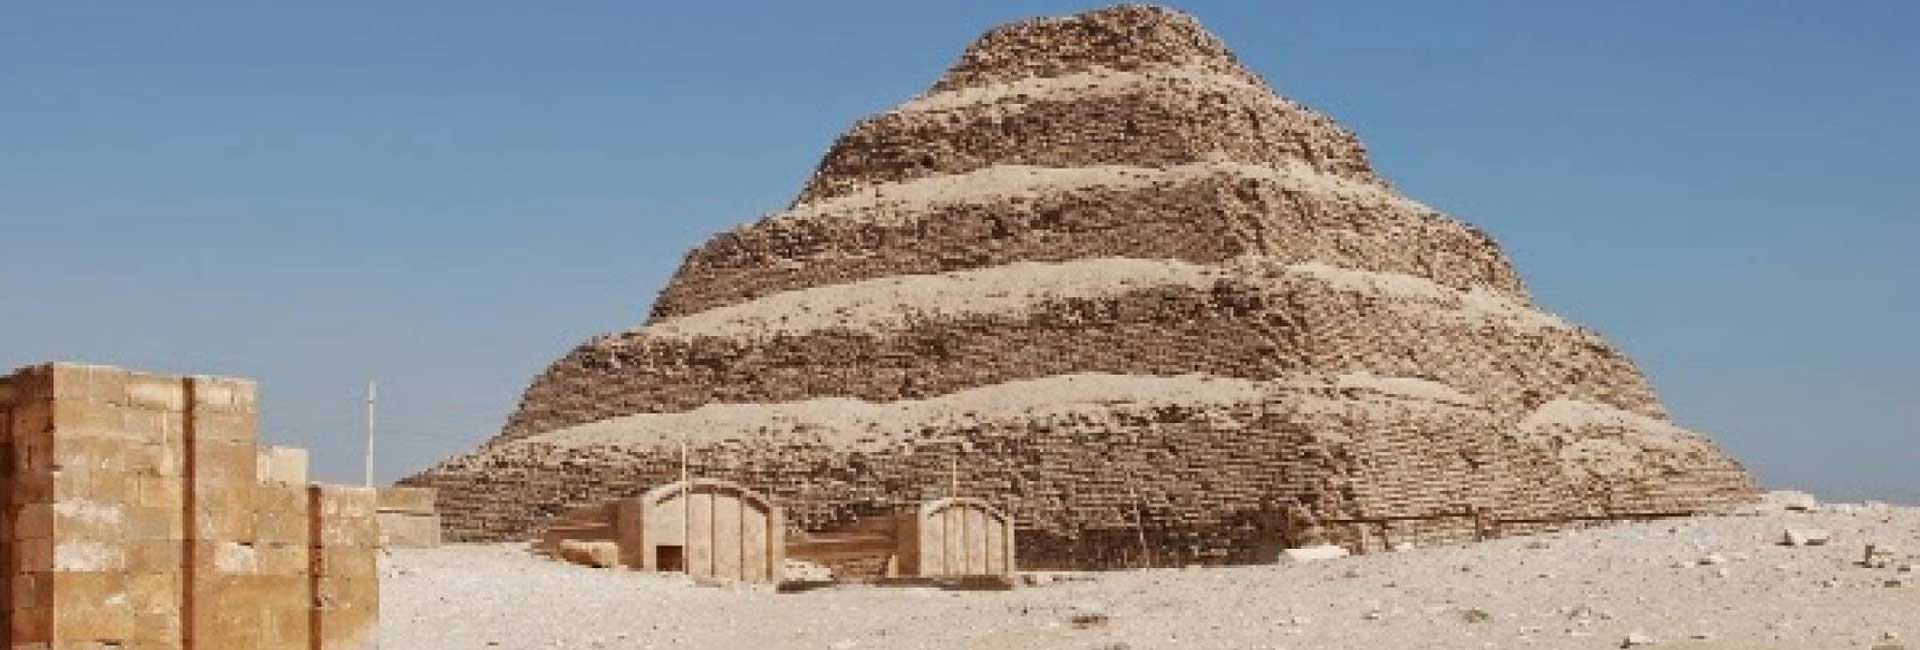 Pyramids of Saqqara